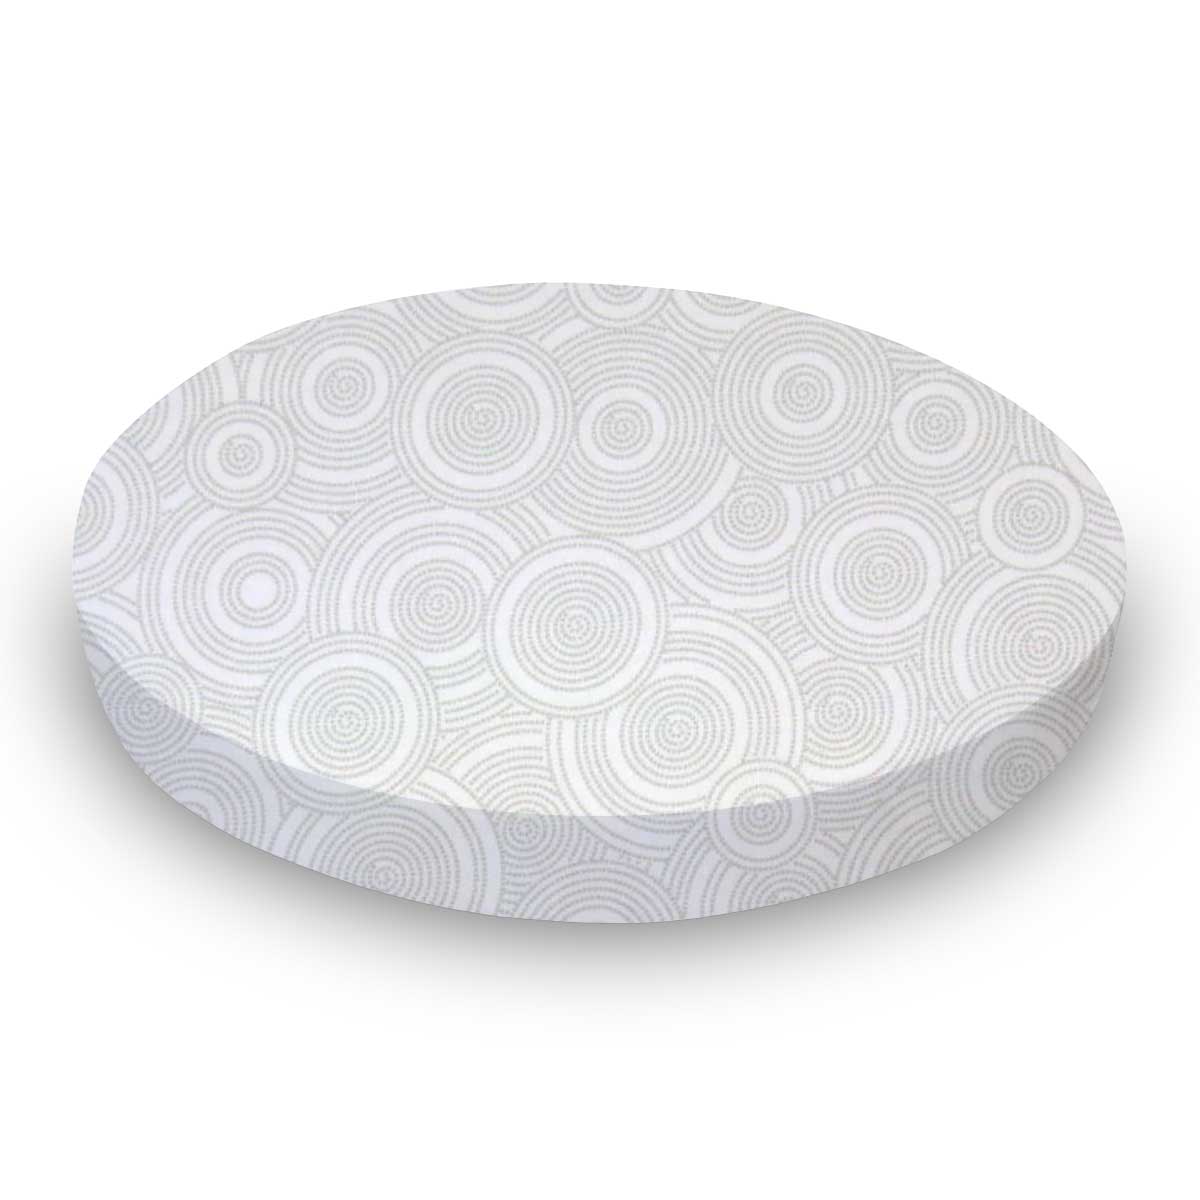 Oval Crib (Stokke Sleepi) - Grey Multi Circles - Fitted  Oval